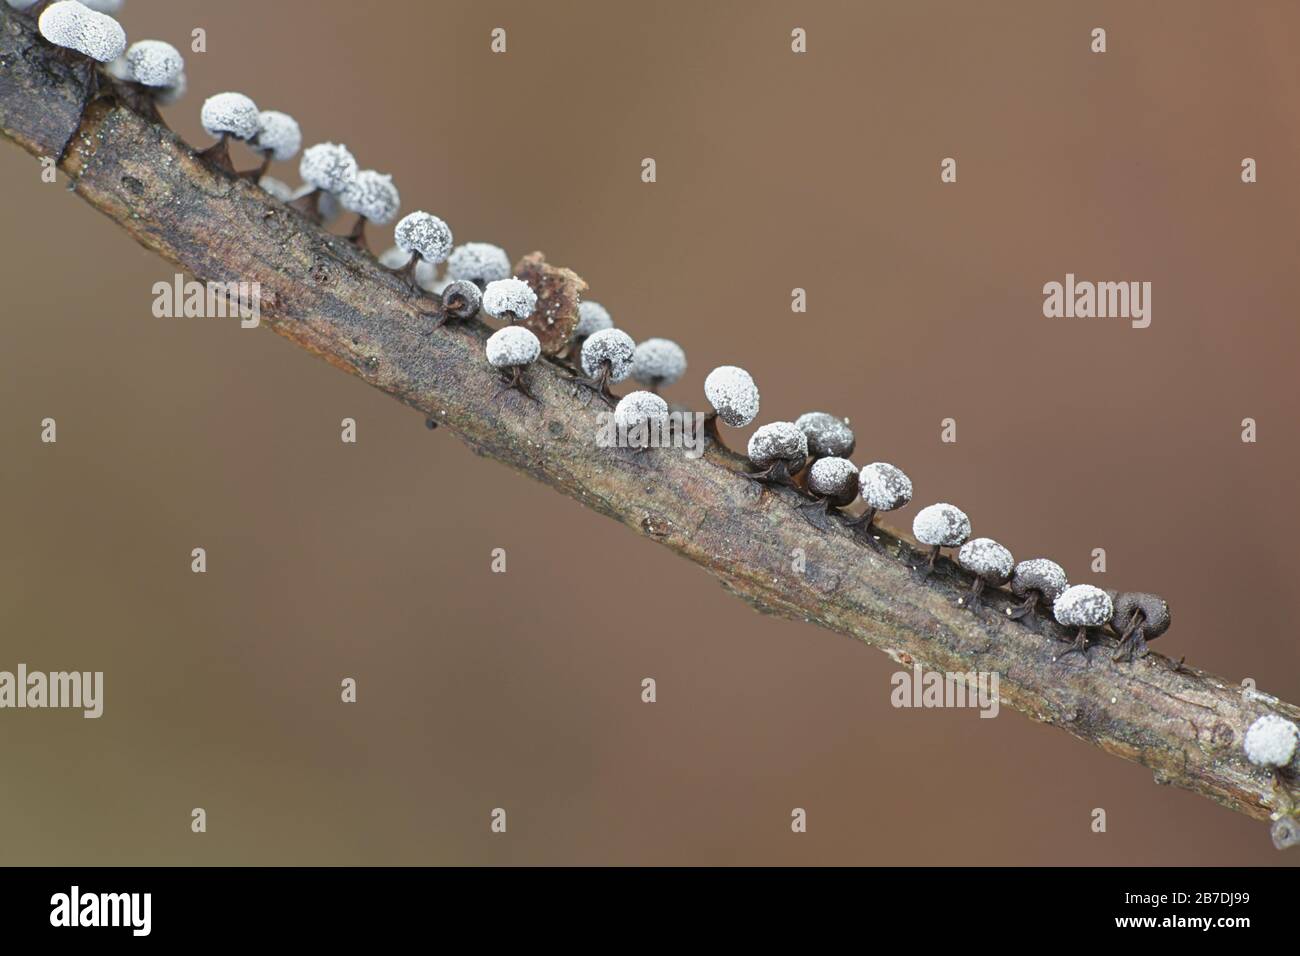 Didymium melanospermum, a slime mold from Finland, no common English name Stock Photo